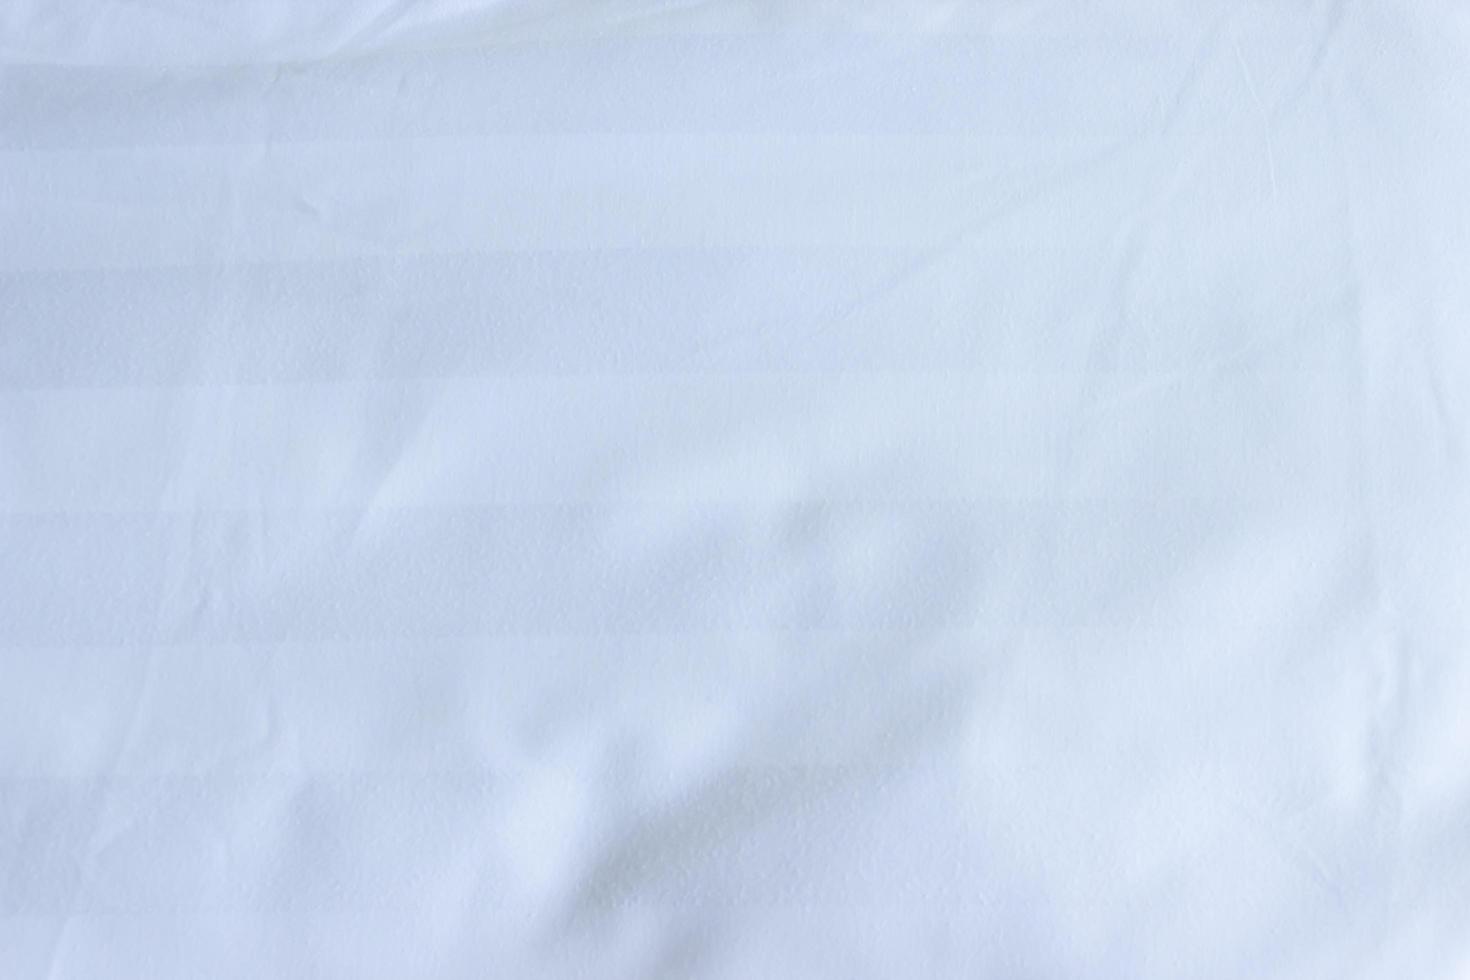 lenzuolo bianco per trama o sfondo foto